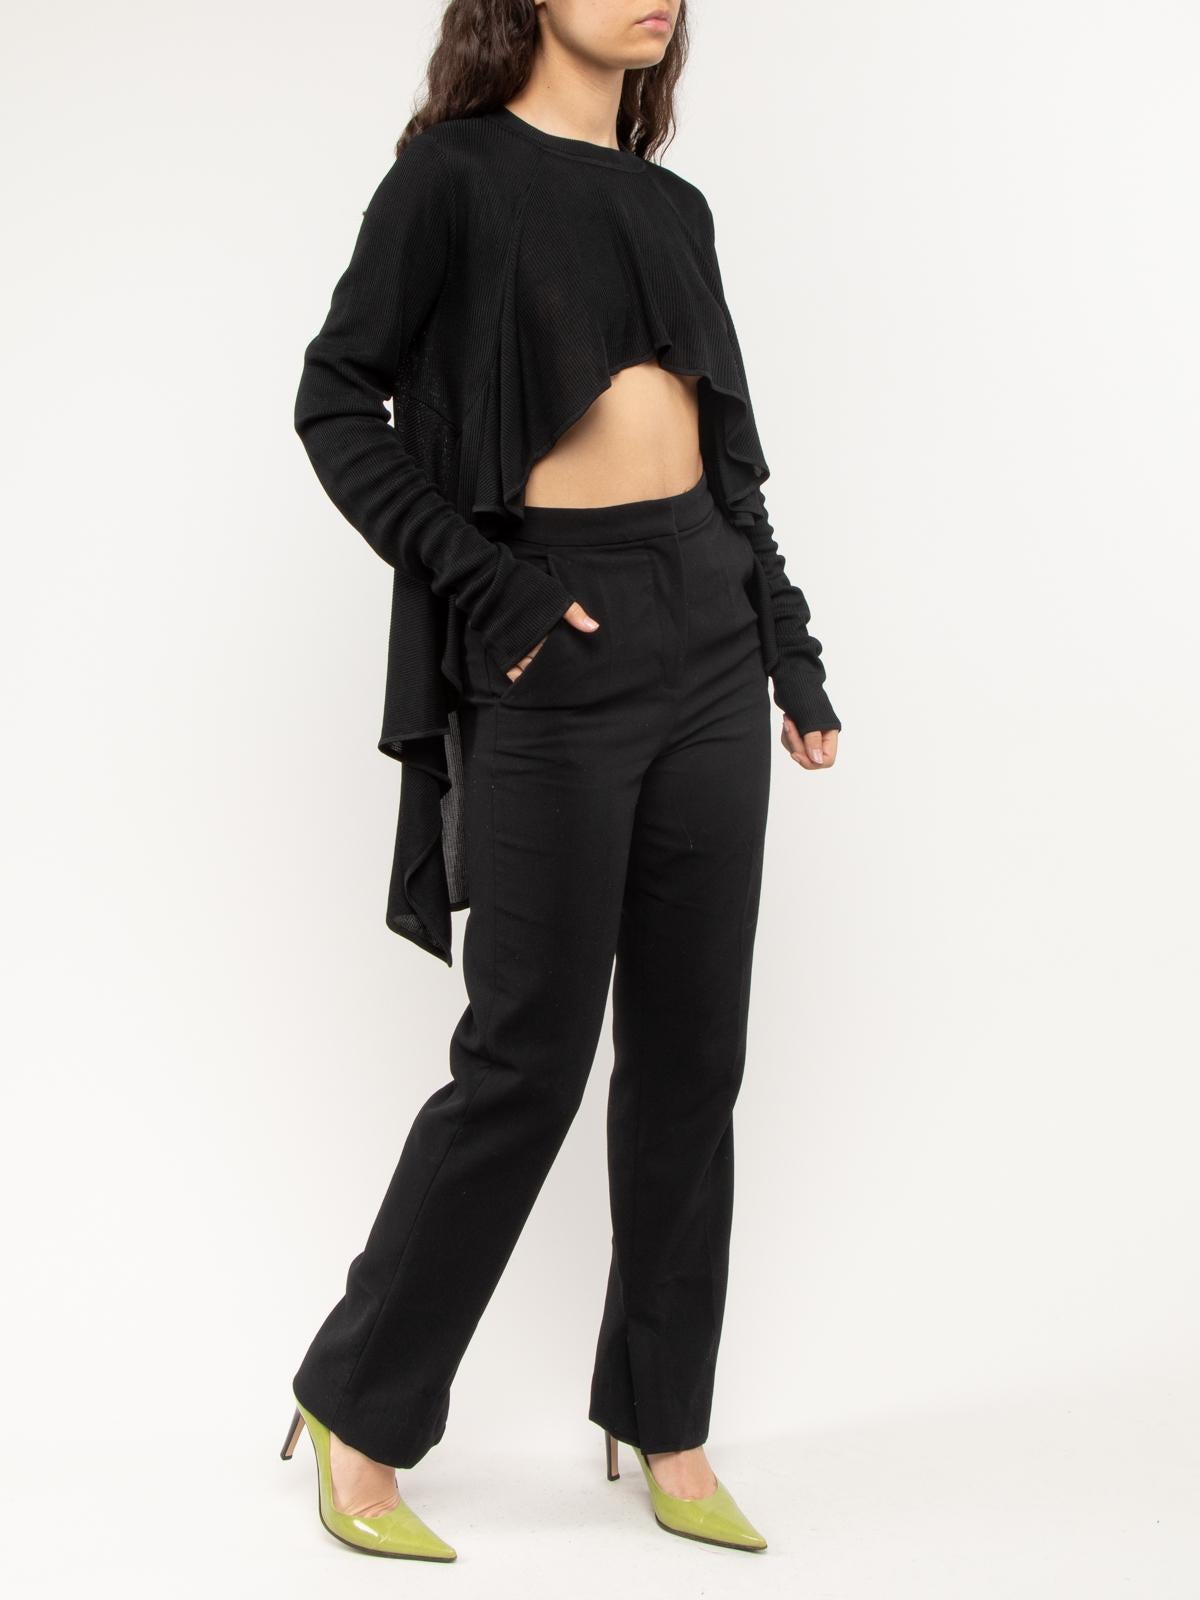 Pre-Loved Alexander Wang Women's Black Knitted High-Front Overlay Jumper 2